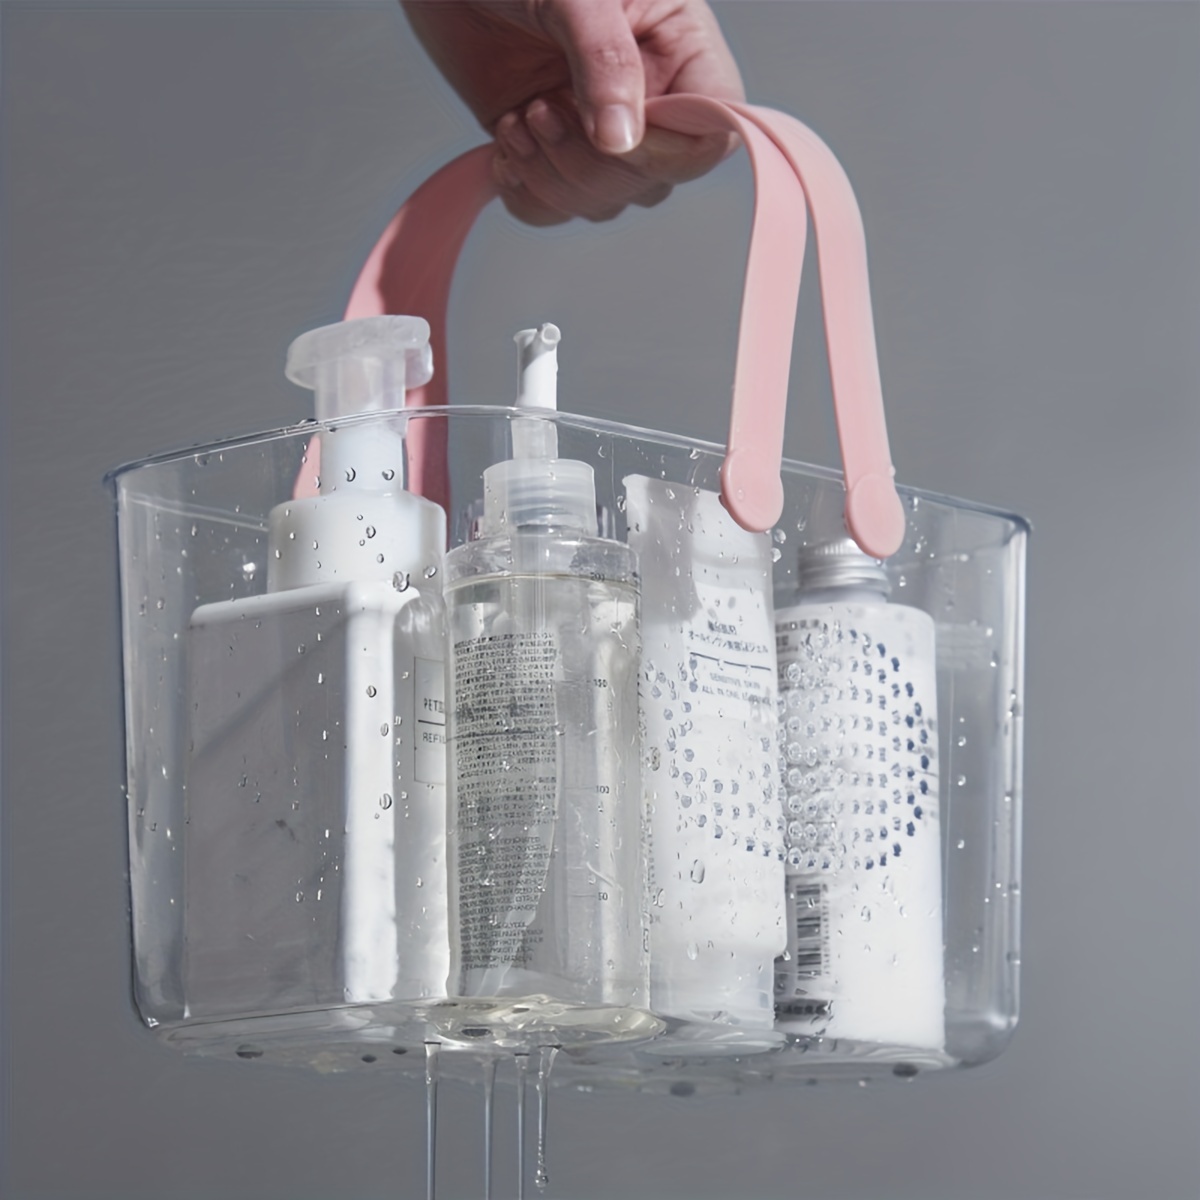 New Shower Caddy Bath Basket Plastic Organizer Storage Tote with